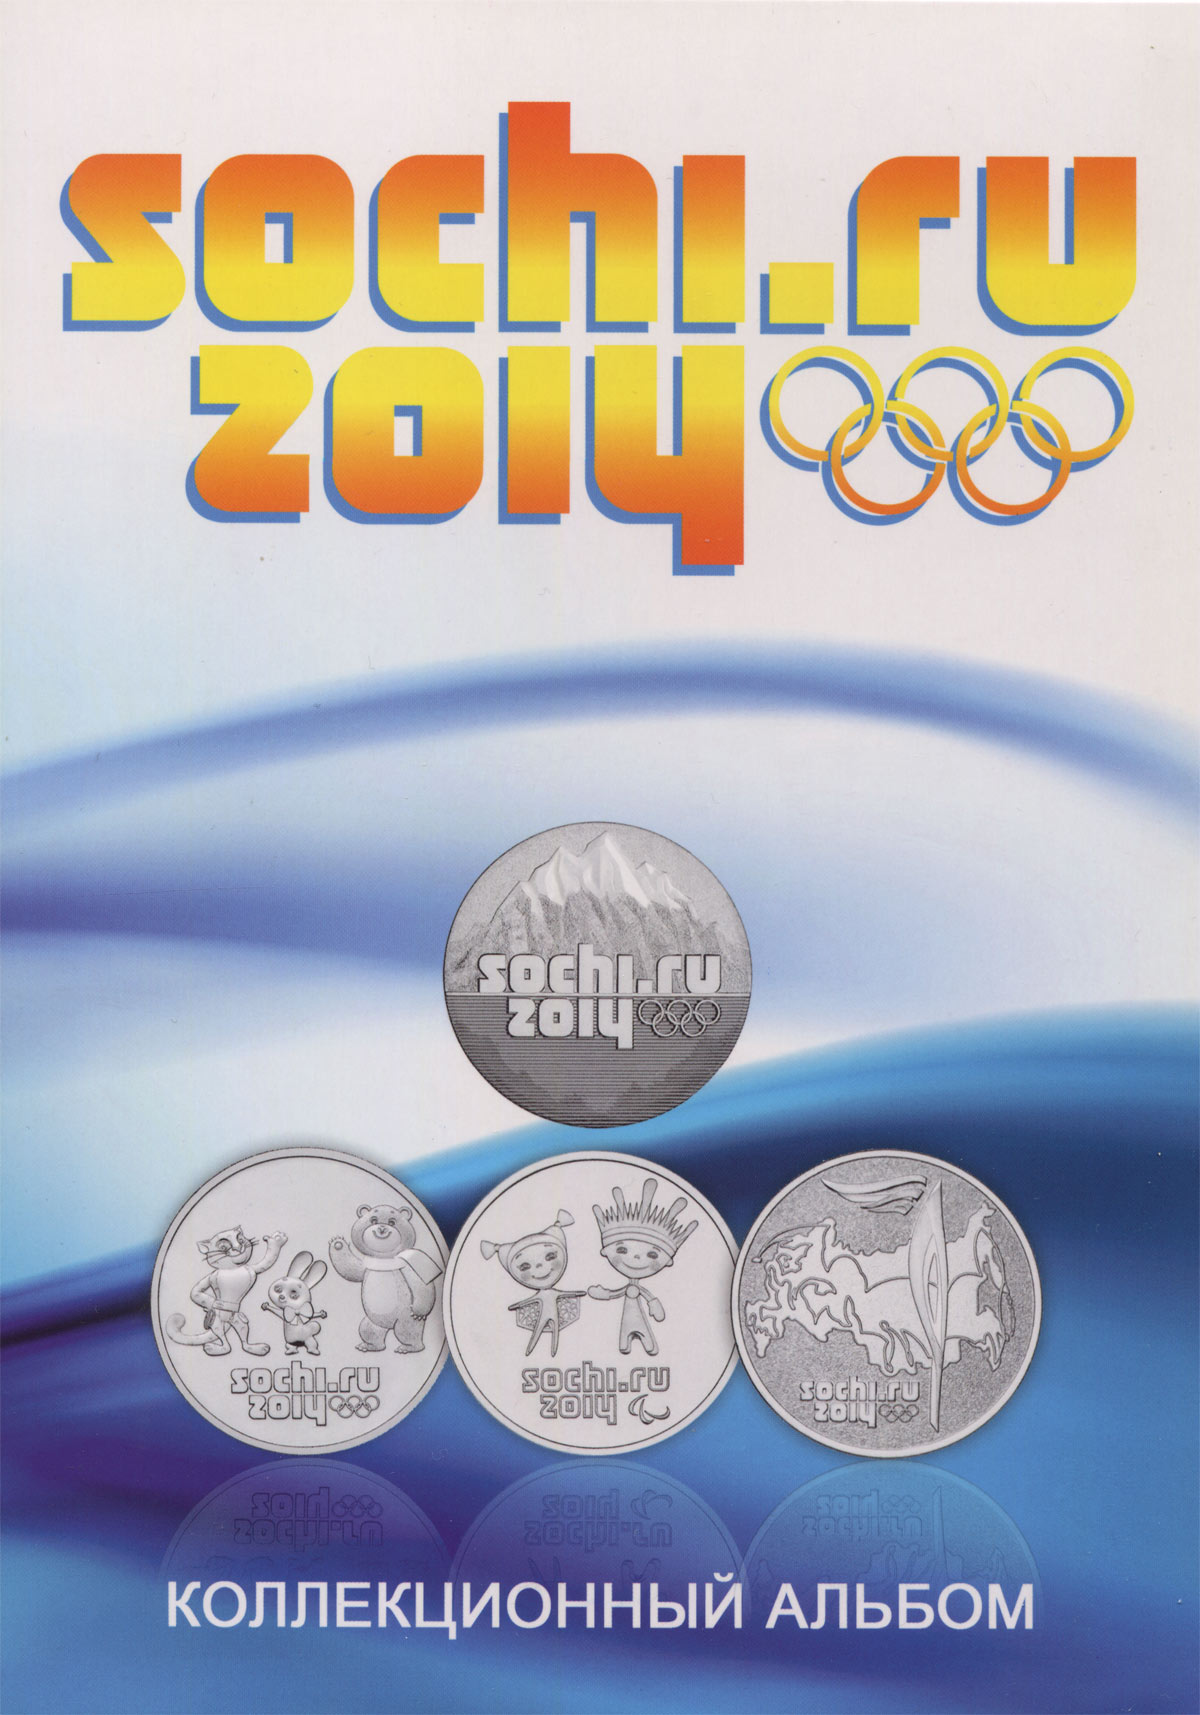 Купюры олимпиады 2014